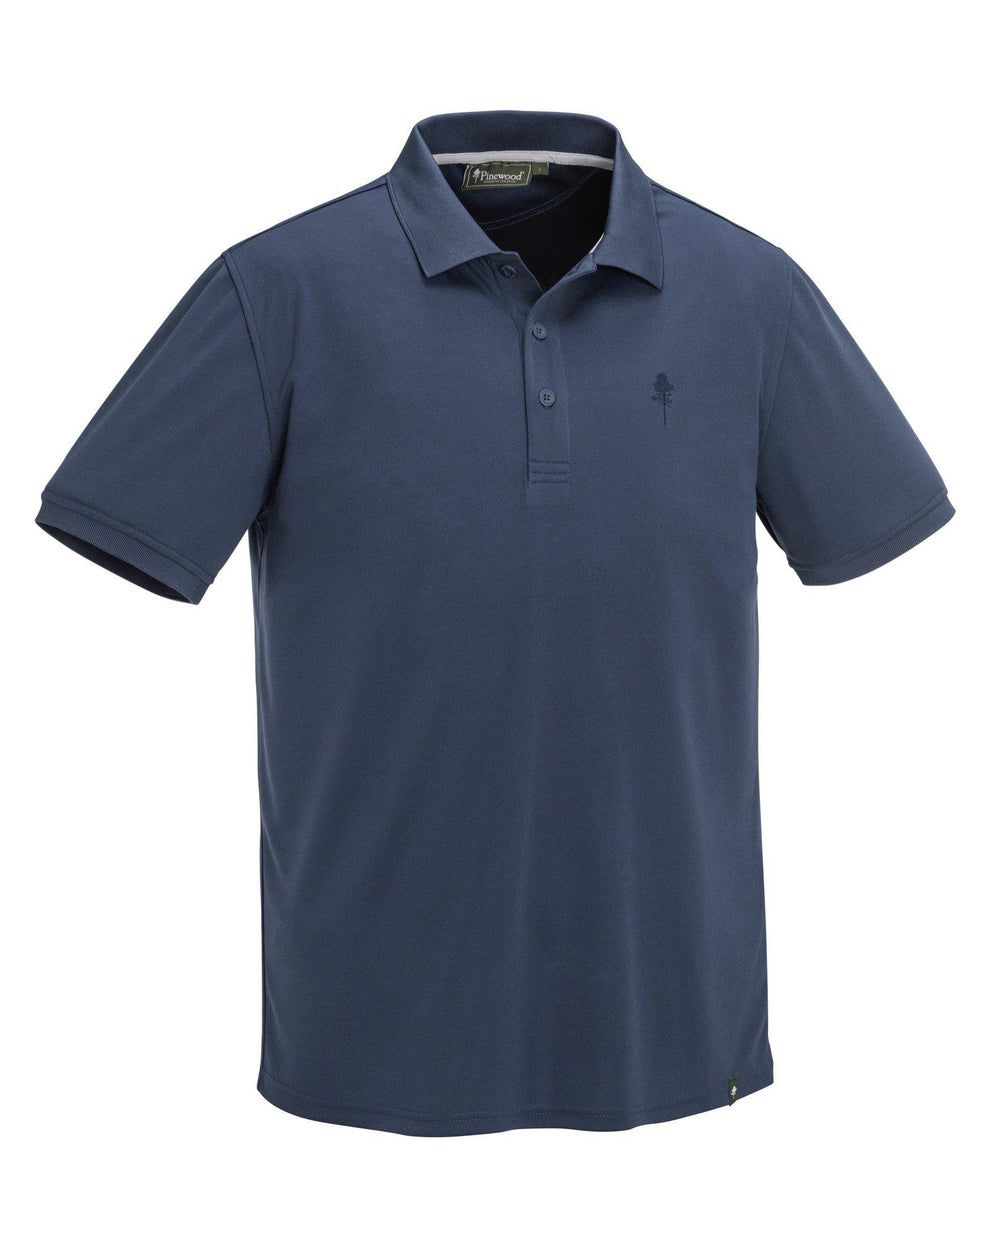 9458-314-01_Pinewood-Polo-Shirt-Ramsey-Coolmax_Dark-Navy